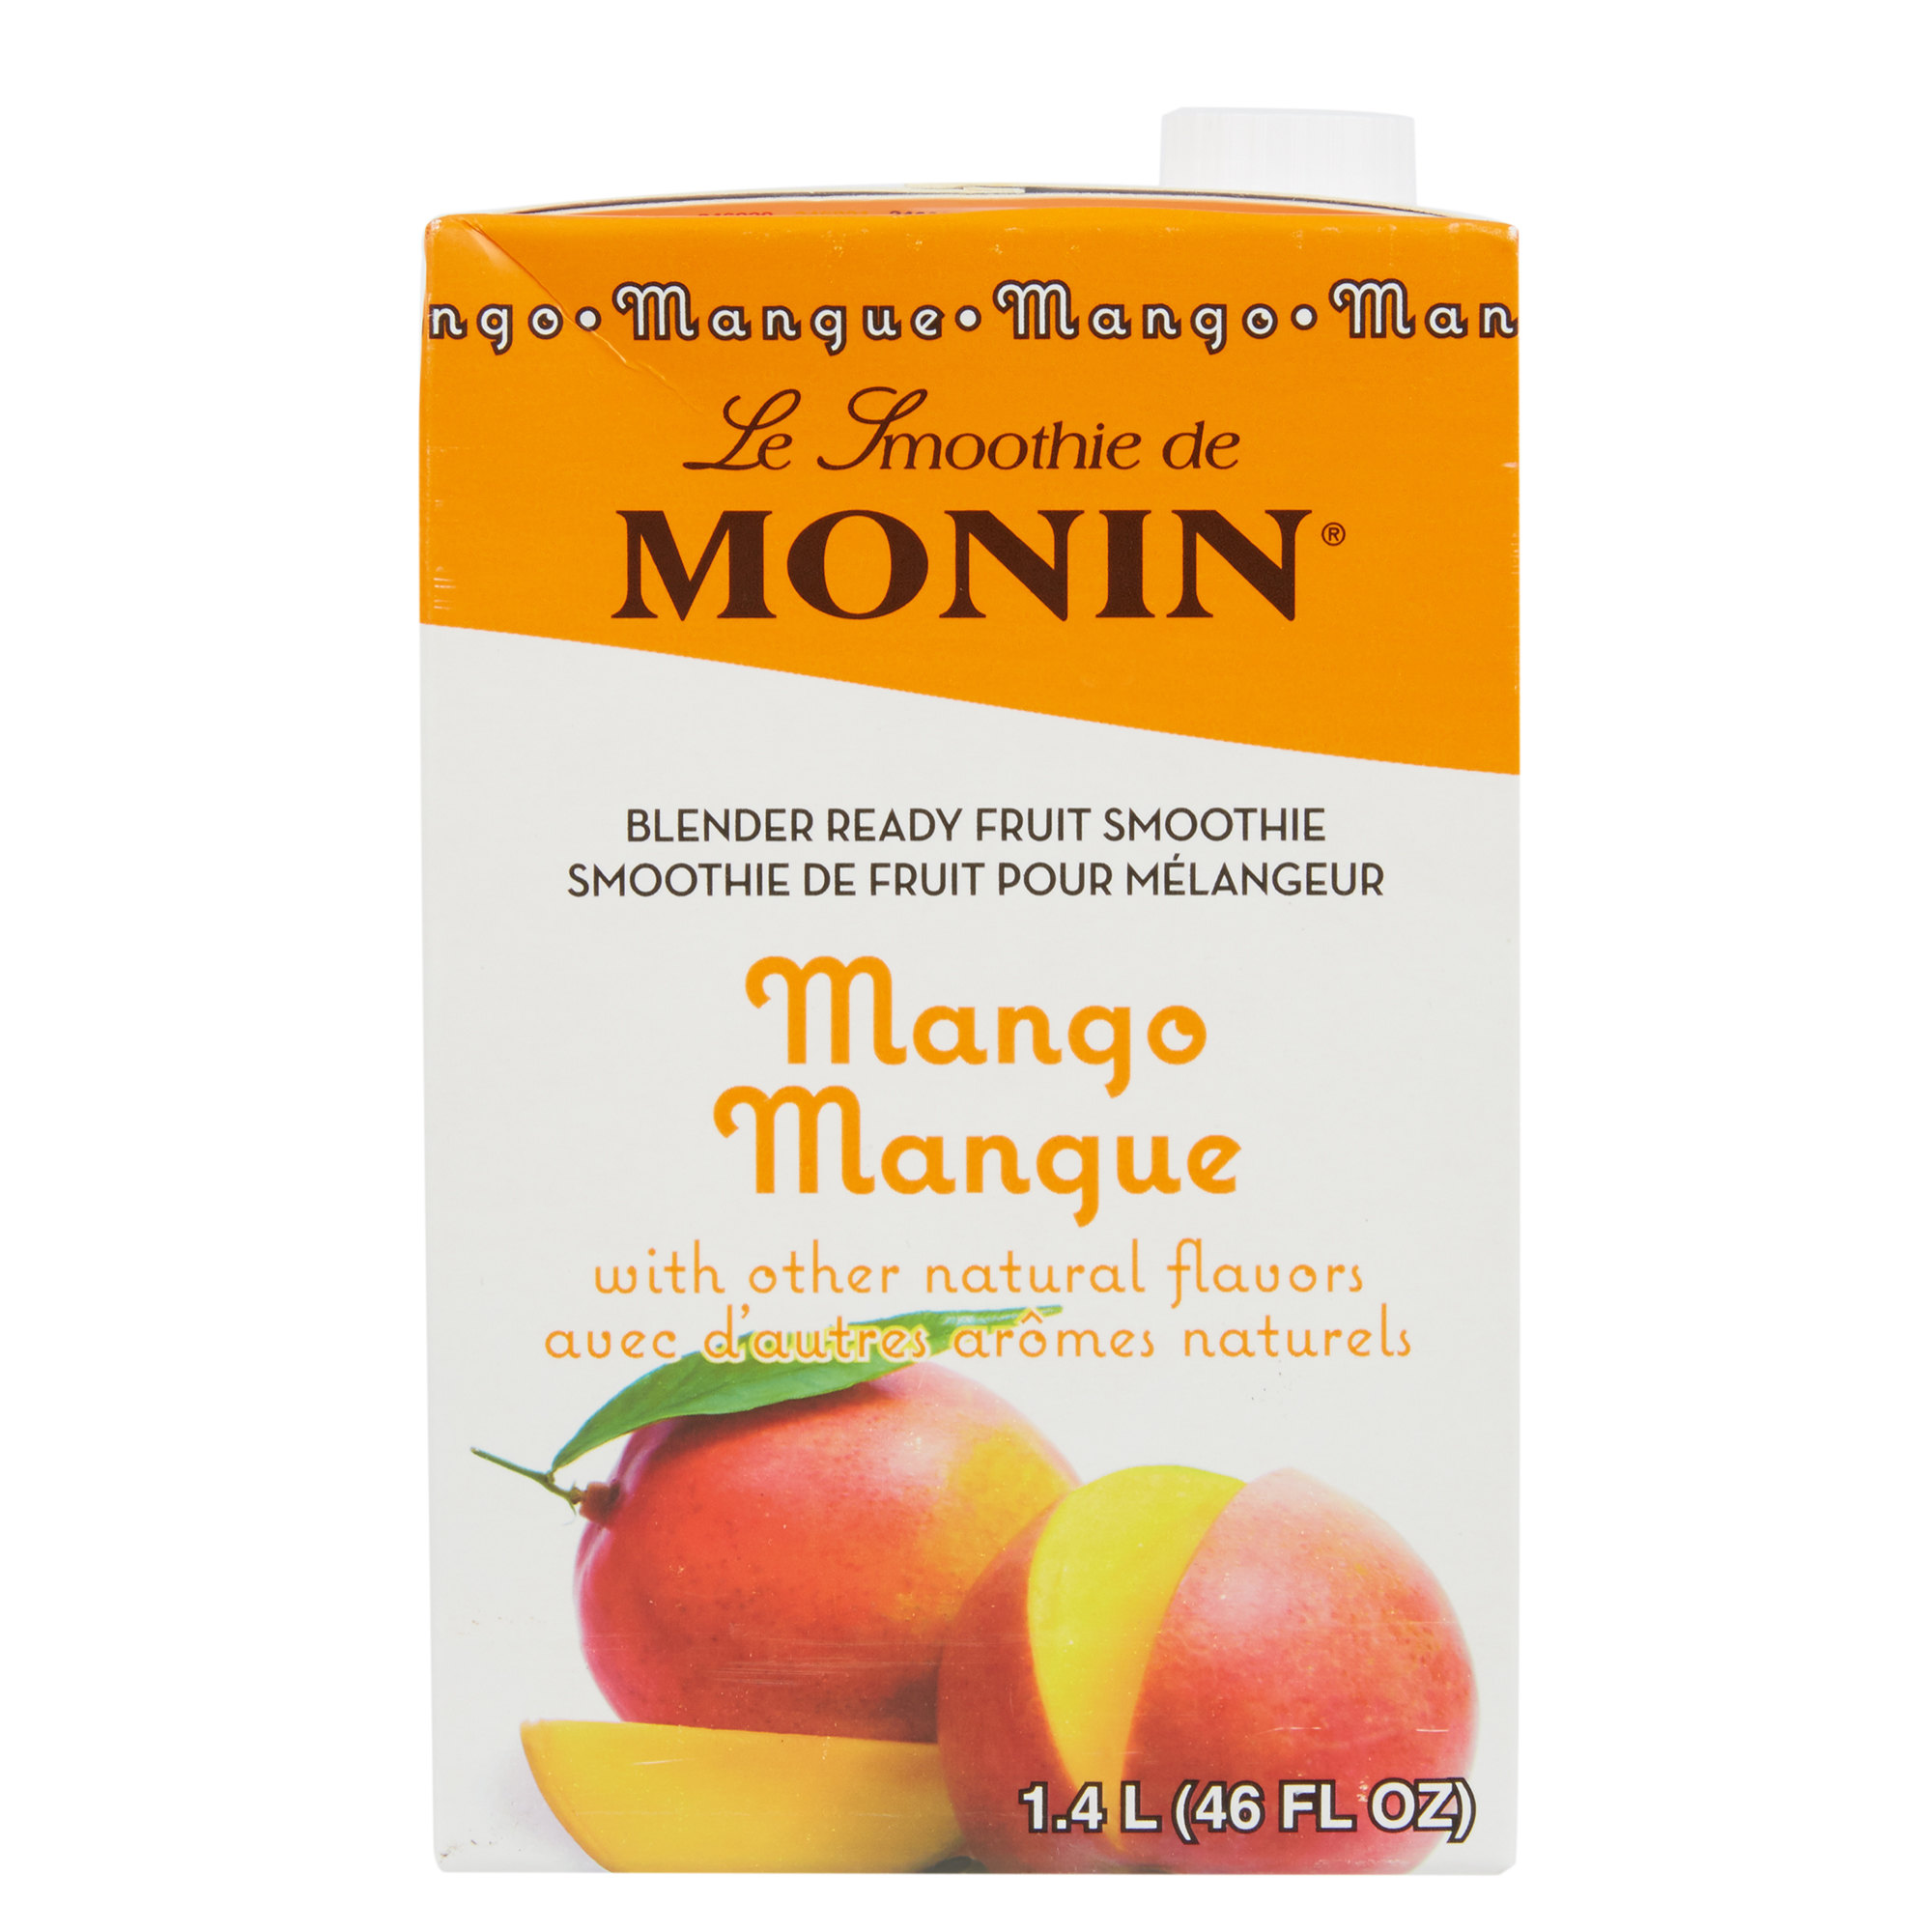 SMOOTHIE MANGO 6/1.4 LITER MONIN M-EG032B